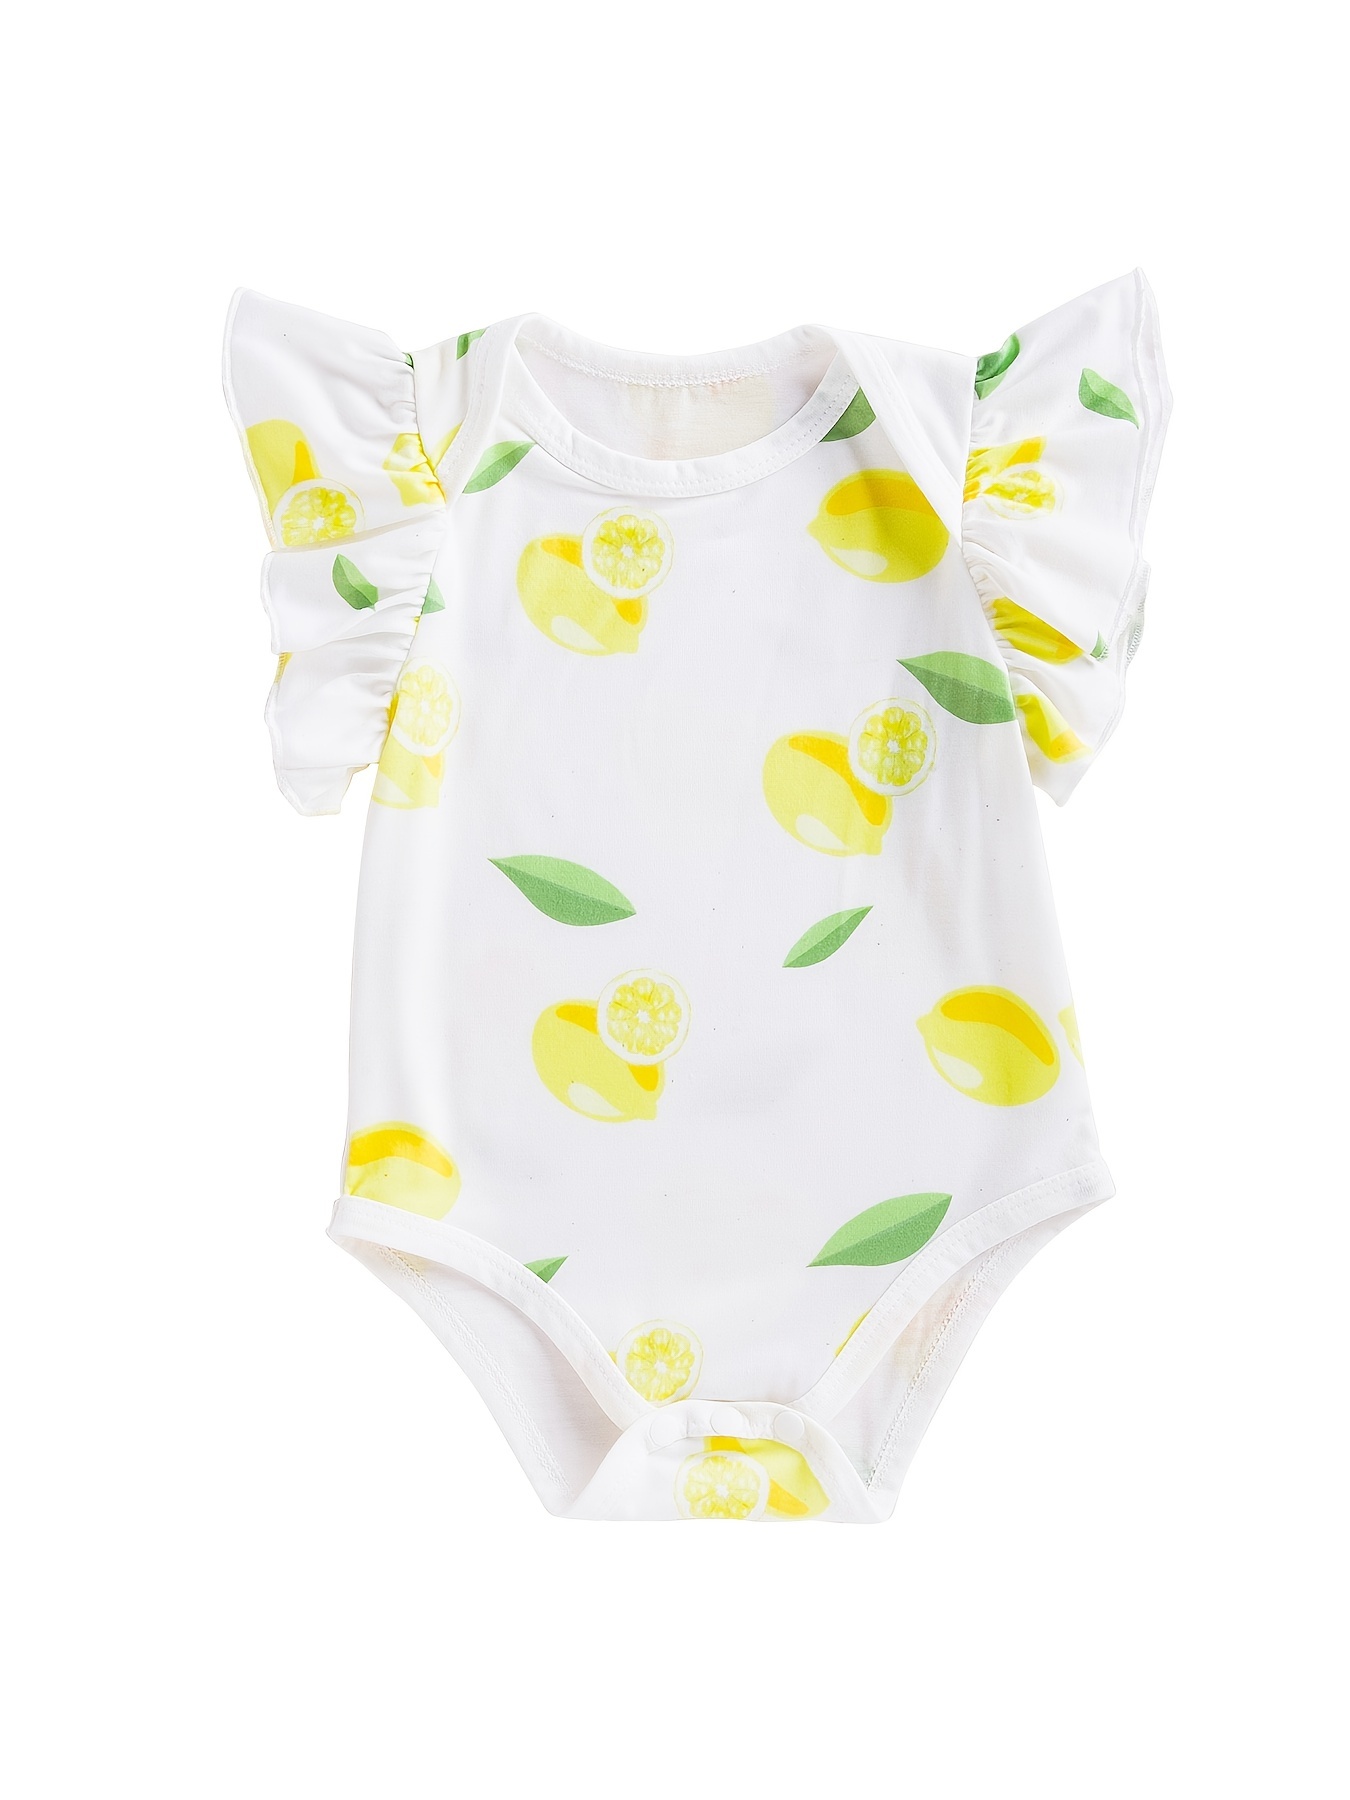 Baby Girls' One-Piece Swimsuit Yellow Fruit Print